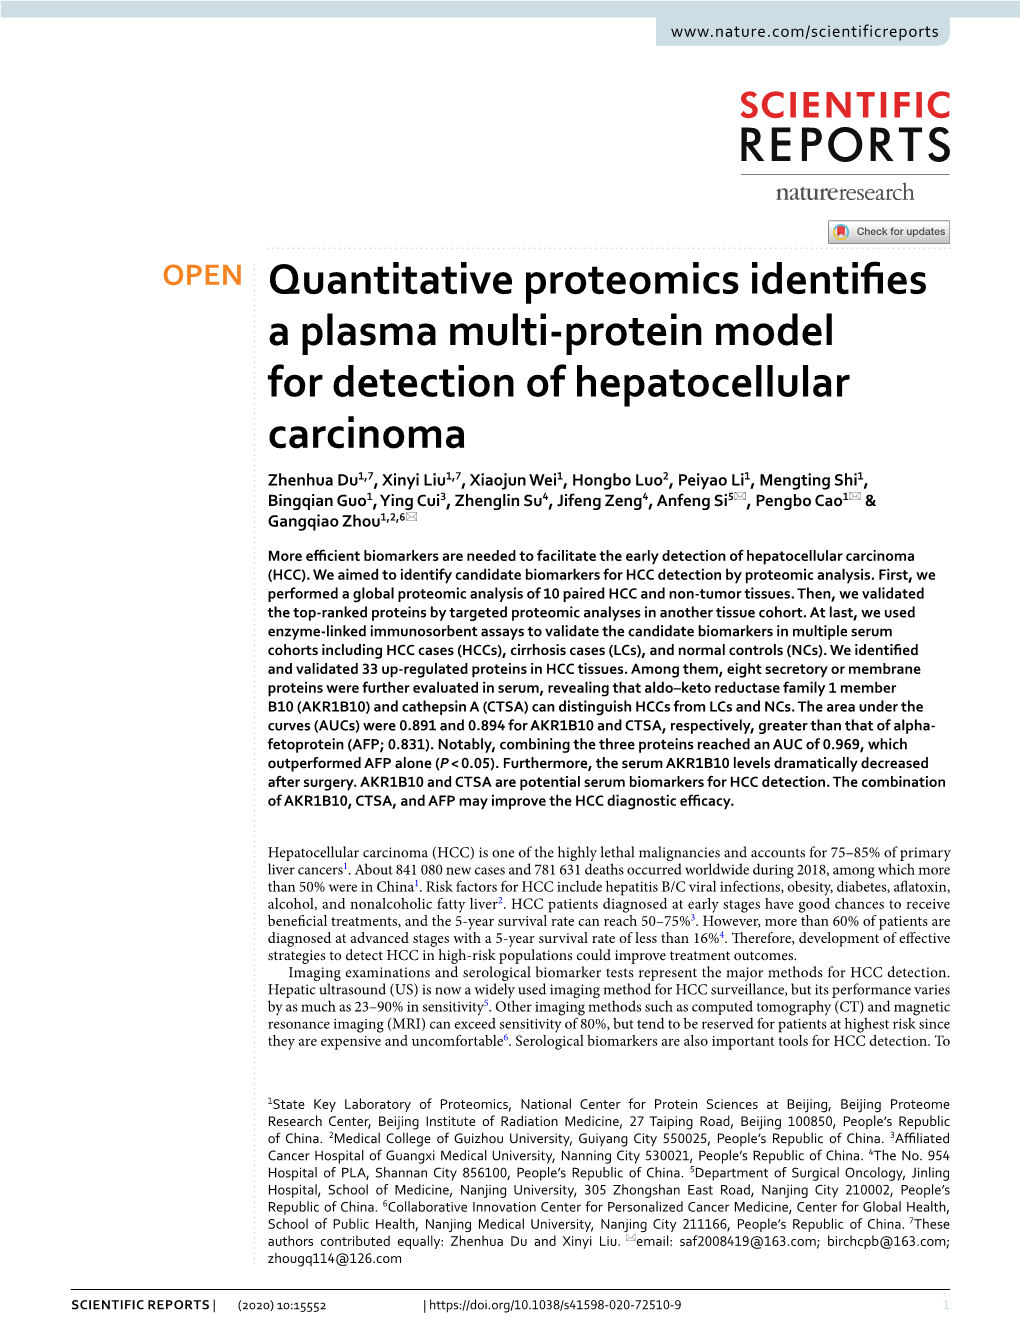 Quantitative Proteomics Identifies a Plasma Multi-Protein Model For